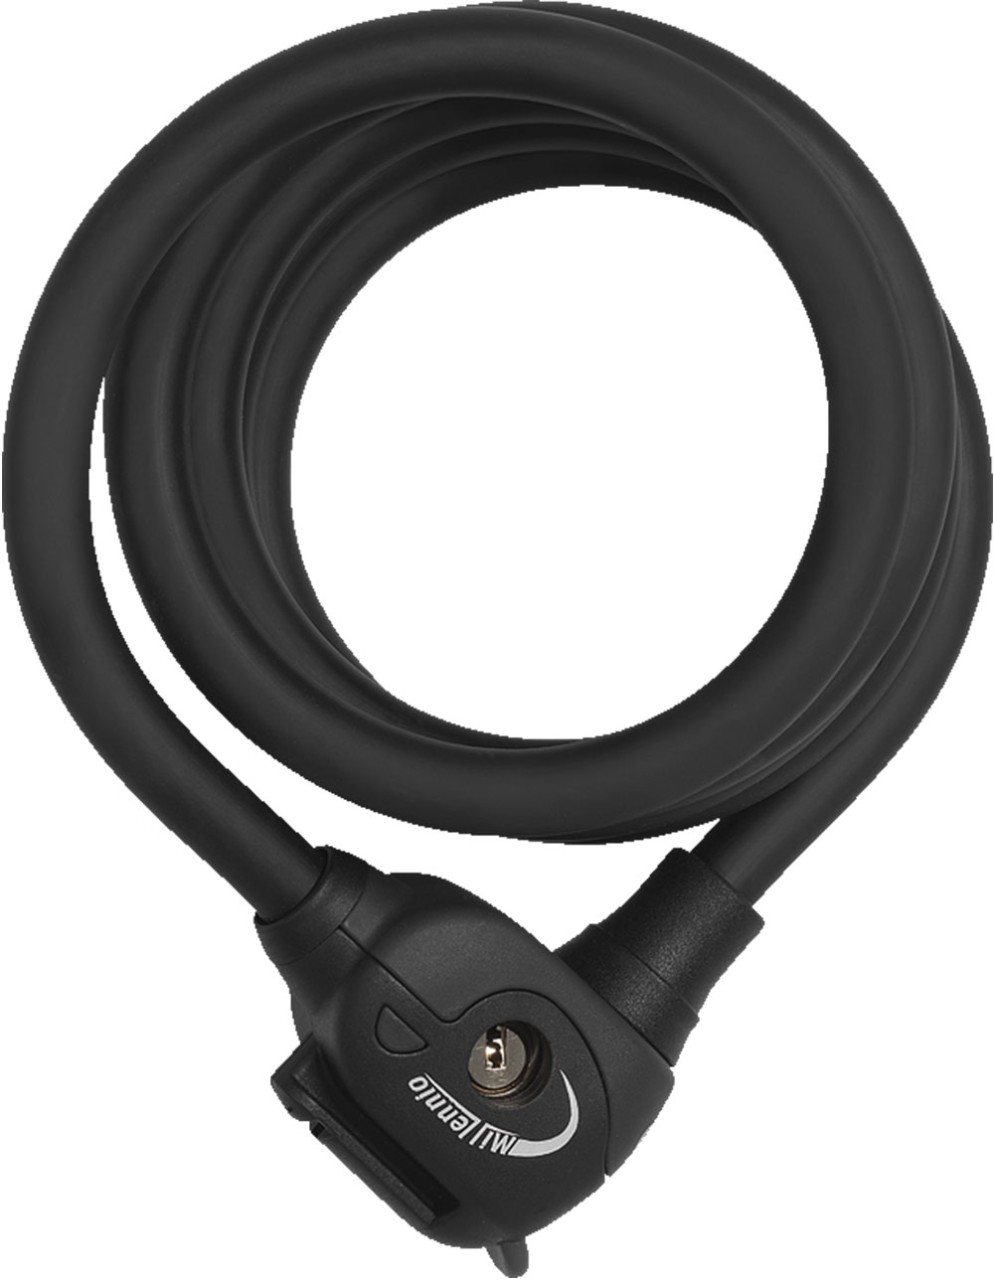 Abus 895 / 185 EC Millennio Phantom spiral cable lock